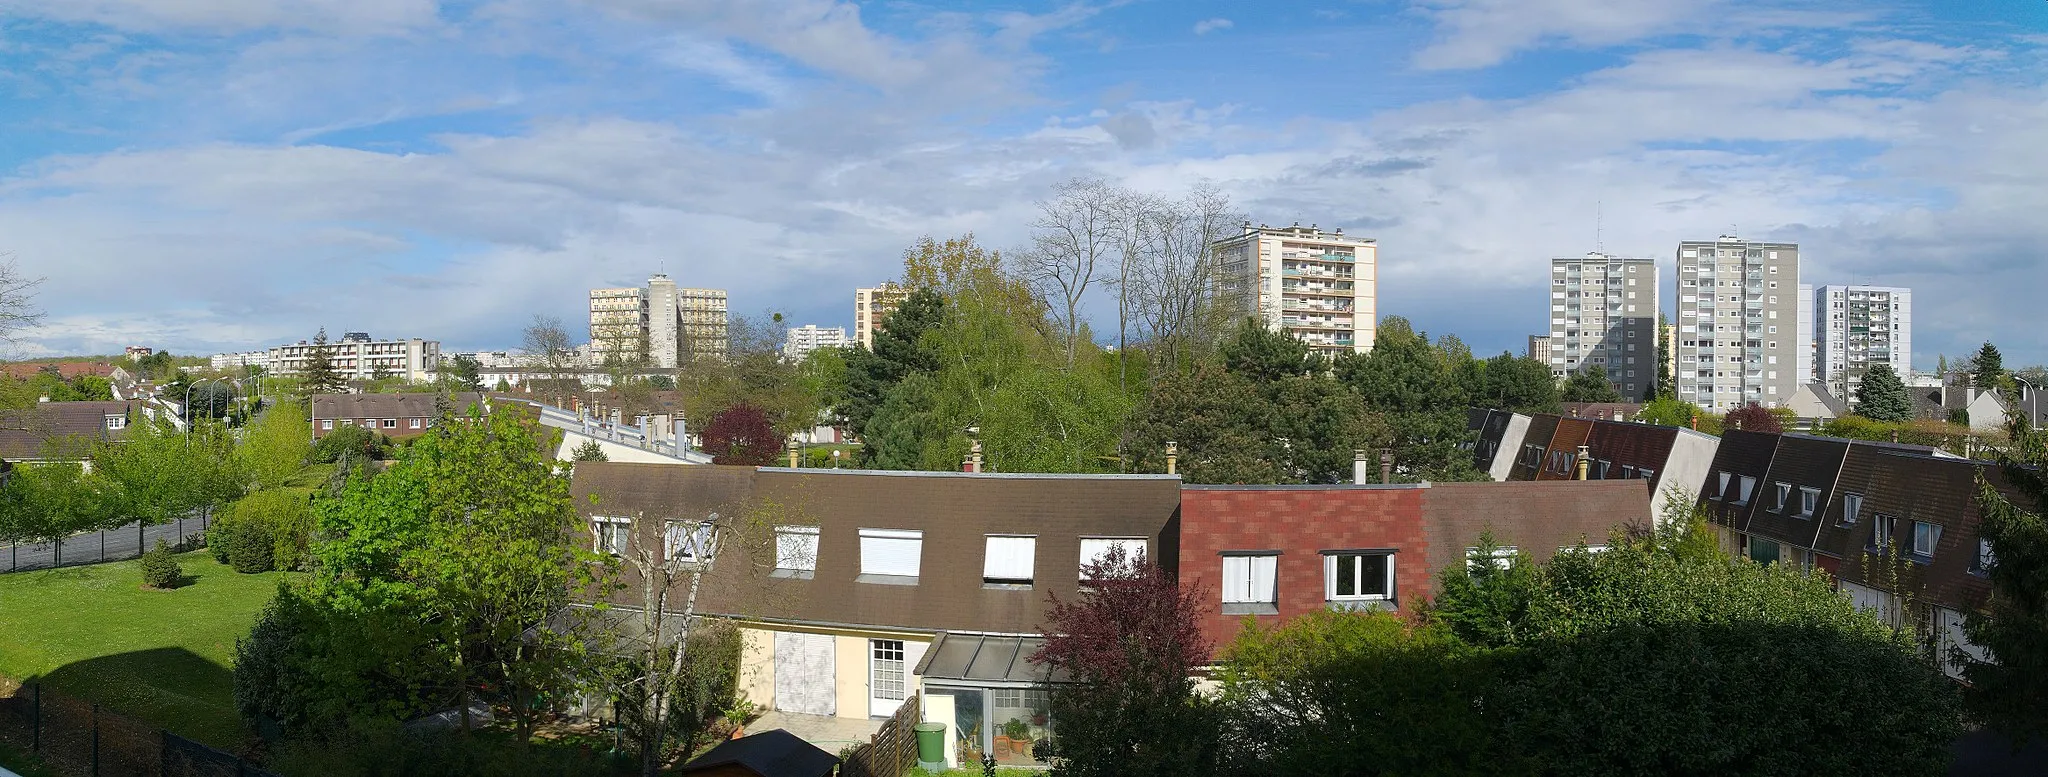 Photo showing: Panorama of Croix blanche area in Le Mée-sur-Seine, in Melun suburb, Seine-et-Marne, France.